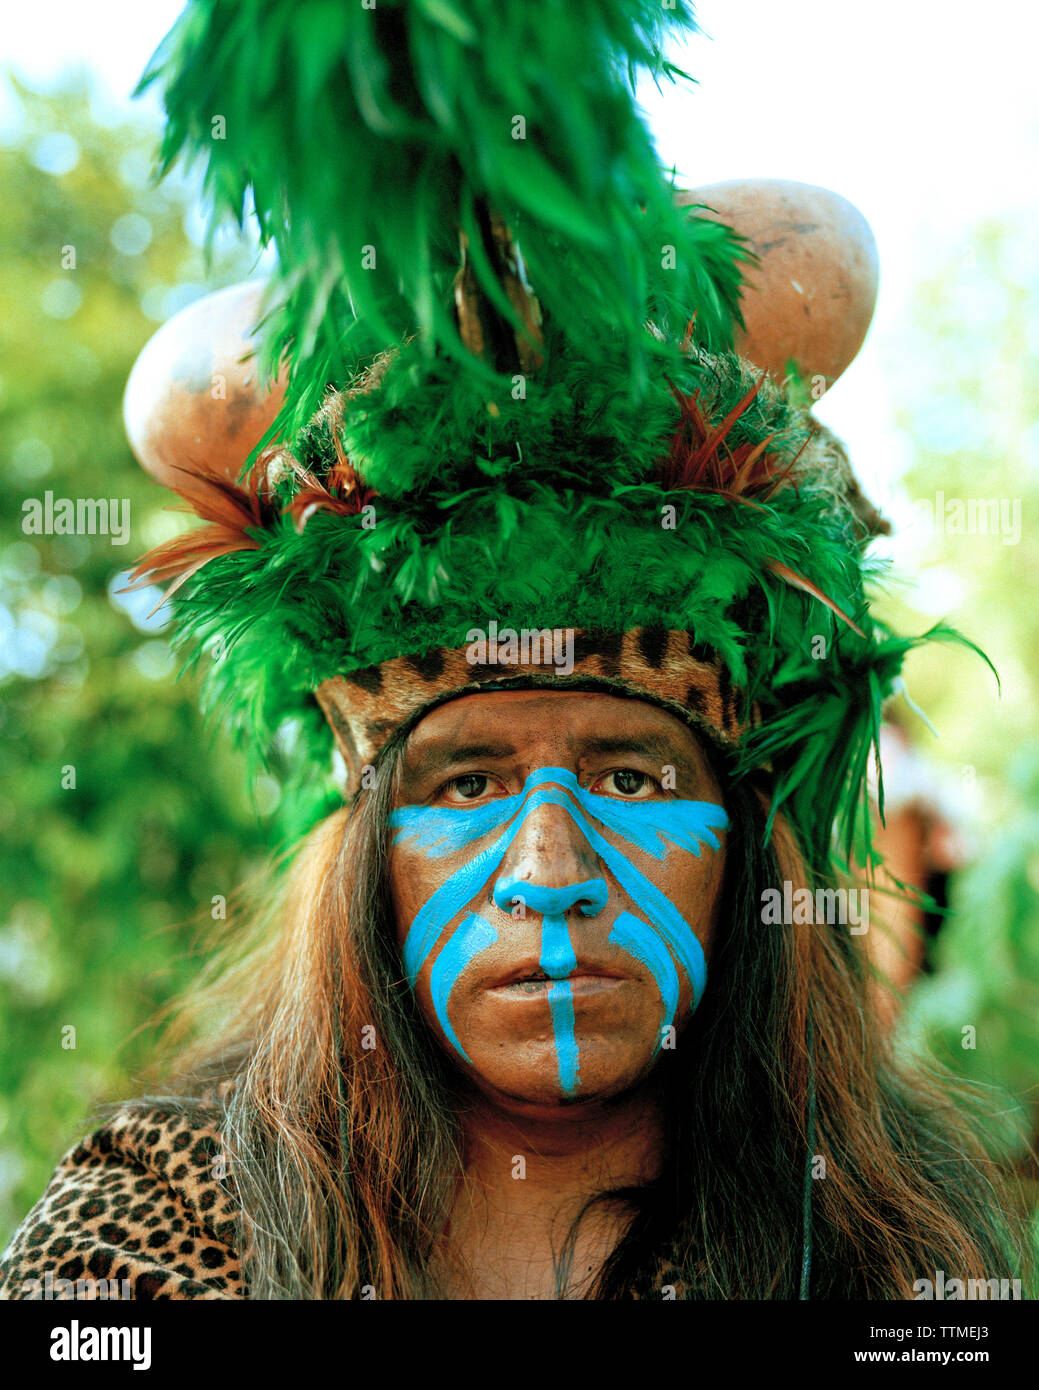 MEXICO, Maya Riviera, Mayan Indian man in ceremonial costume, Yucatan Peninsula Stock Photo